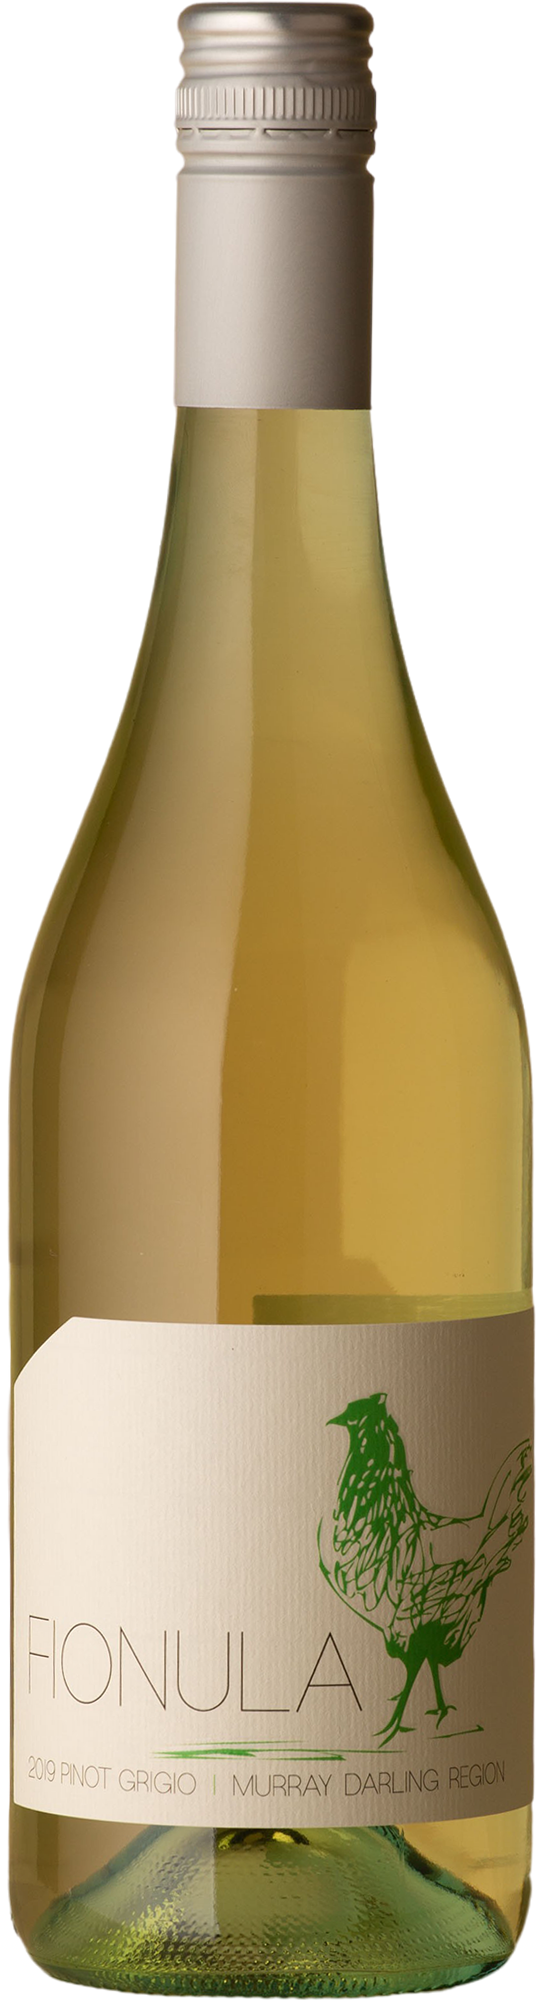 Quealy - Fionula Pinot Grigio 2019 White Wine